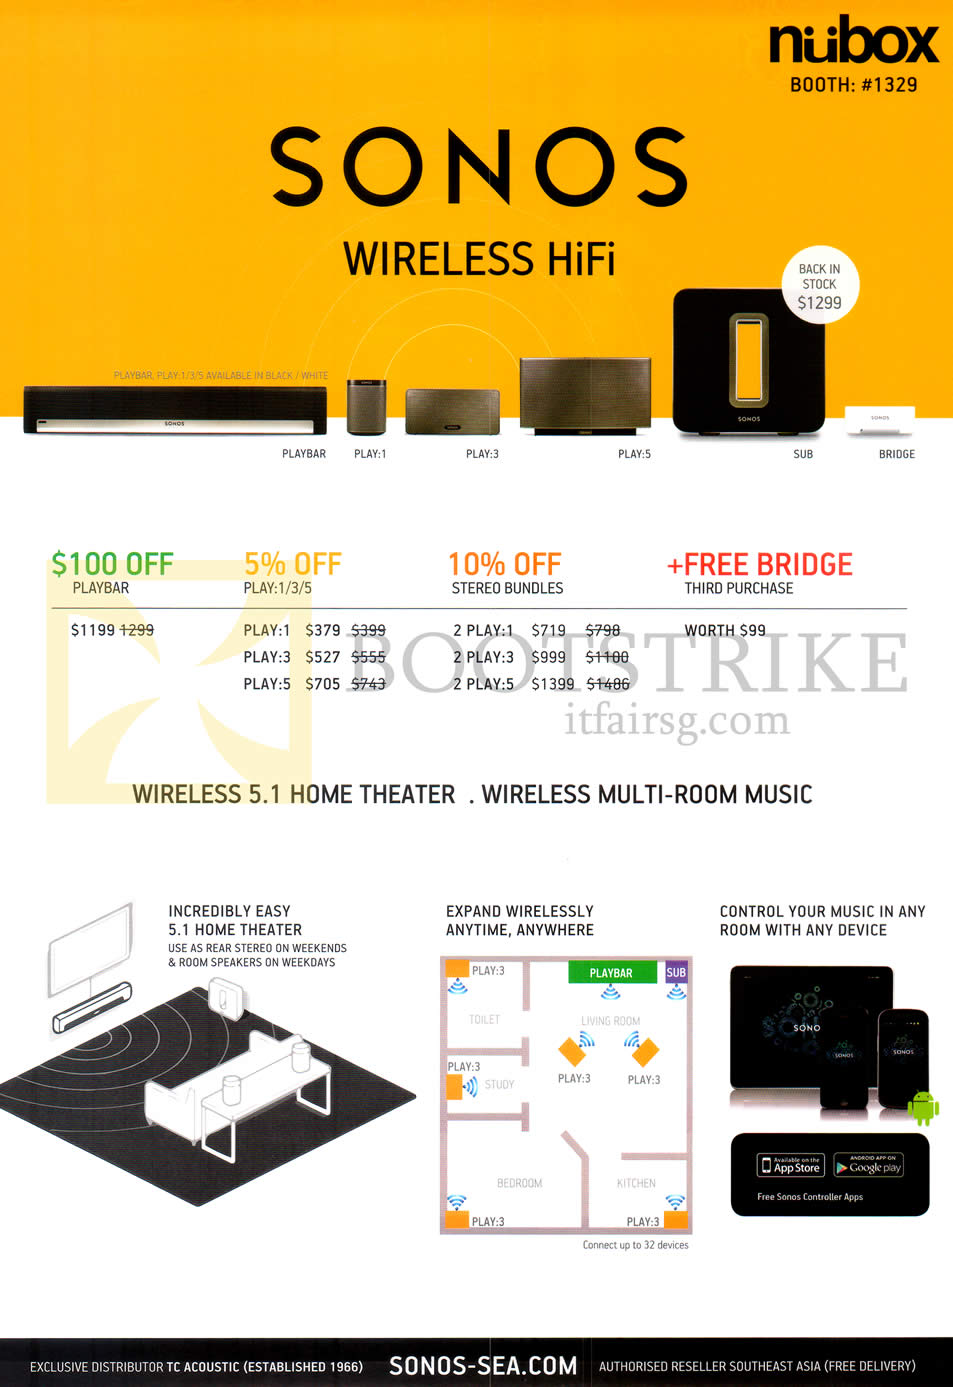 IT SHOW 2014 price list image brochure of Nubox Sonos Wireless Home Theatre System Playbar, Sub, Bridge